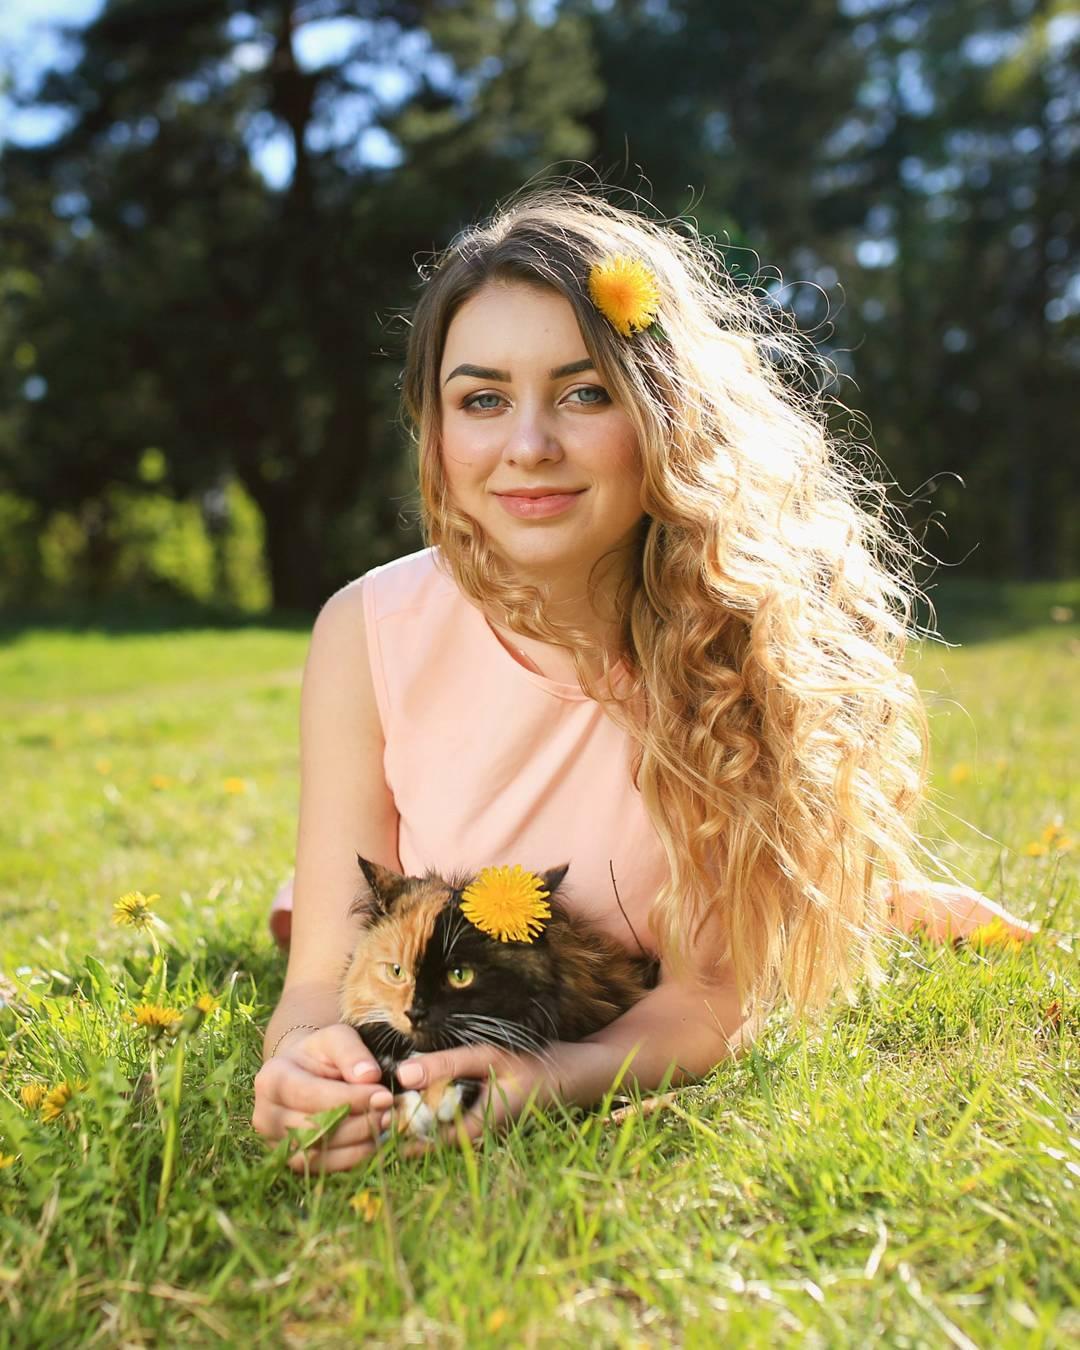 Elizabeth Rubashko with her cat, Yana.  (Courtesy of <a href="https://www.instagram.com/yanatwofacecat/">Yana the Two-Faced Cat</a>)